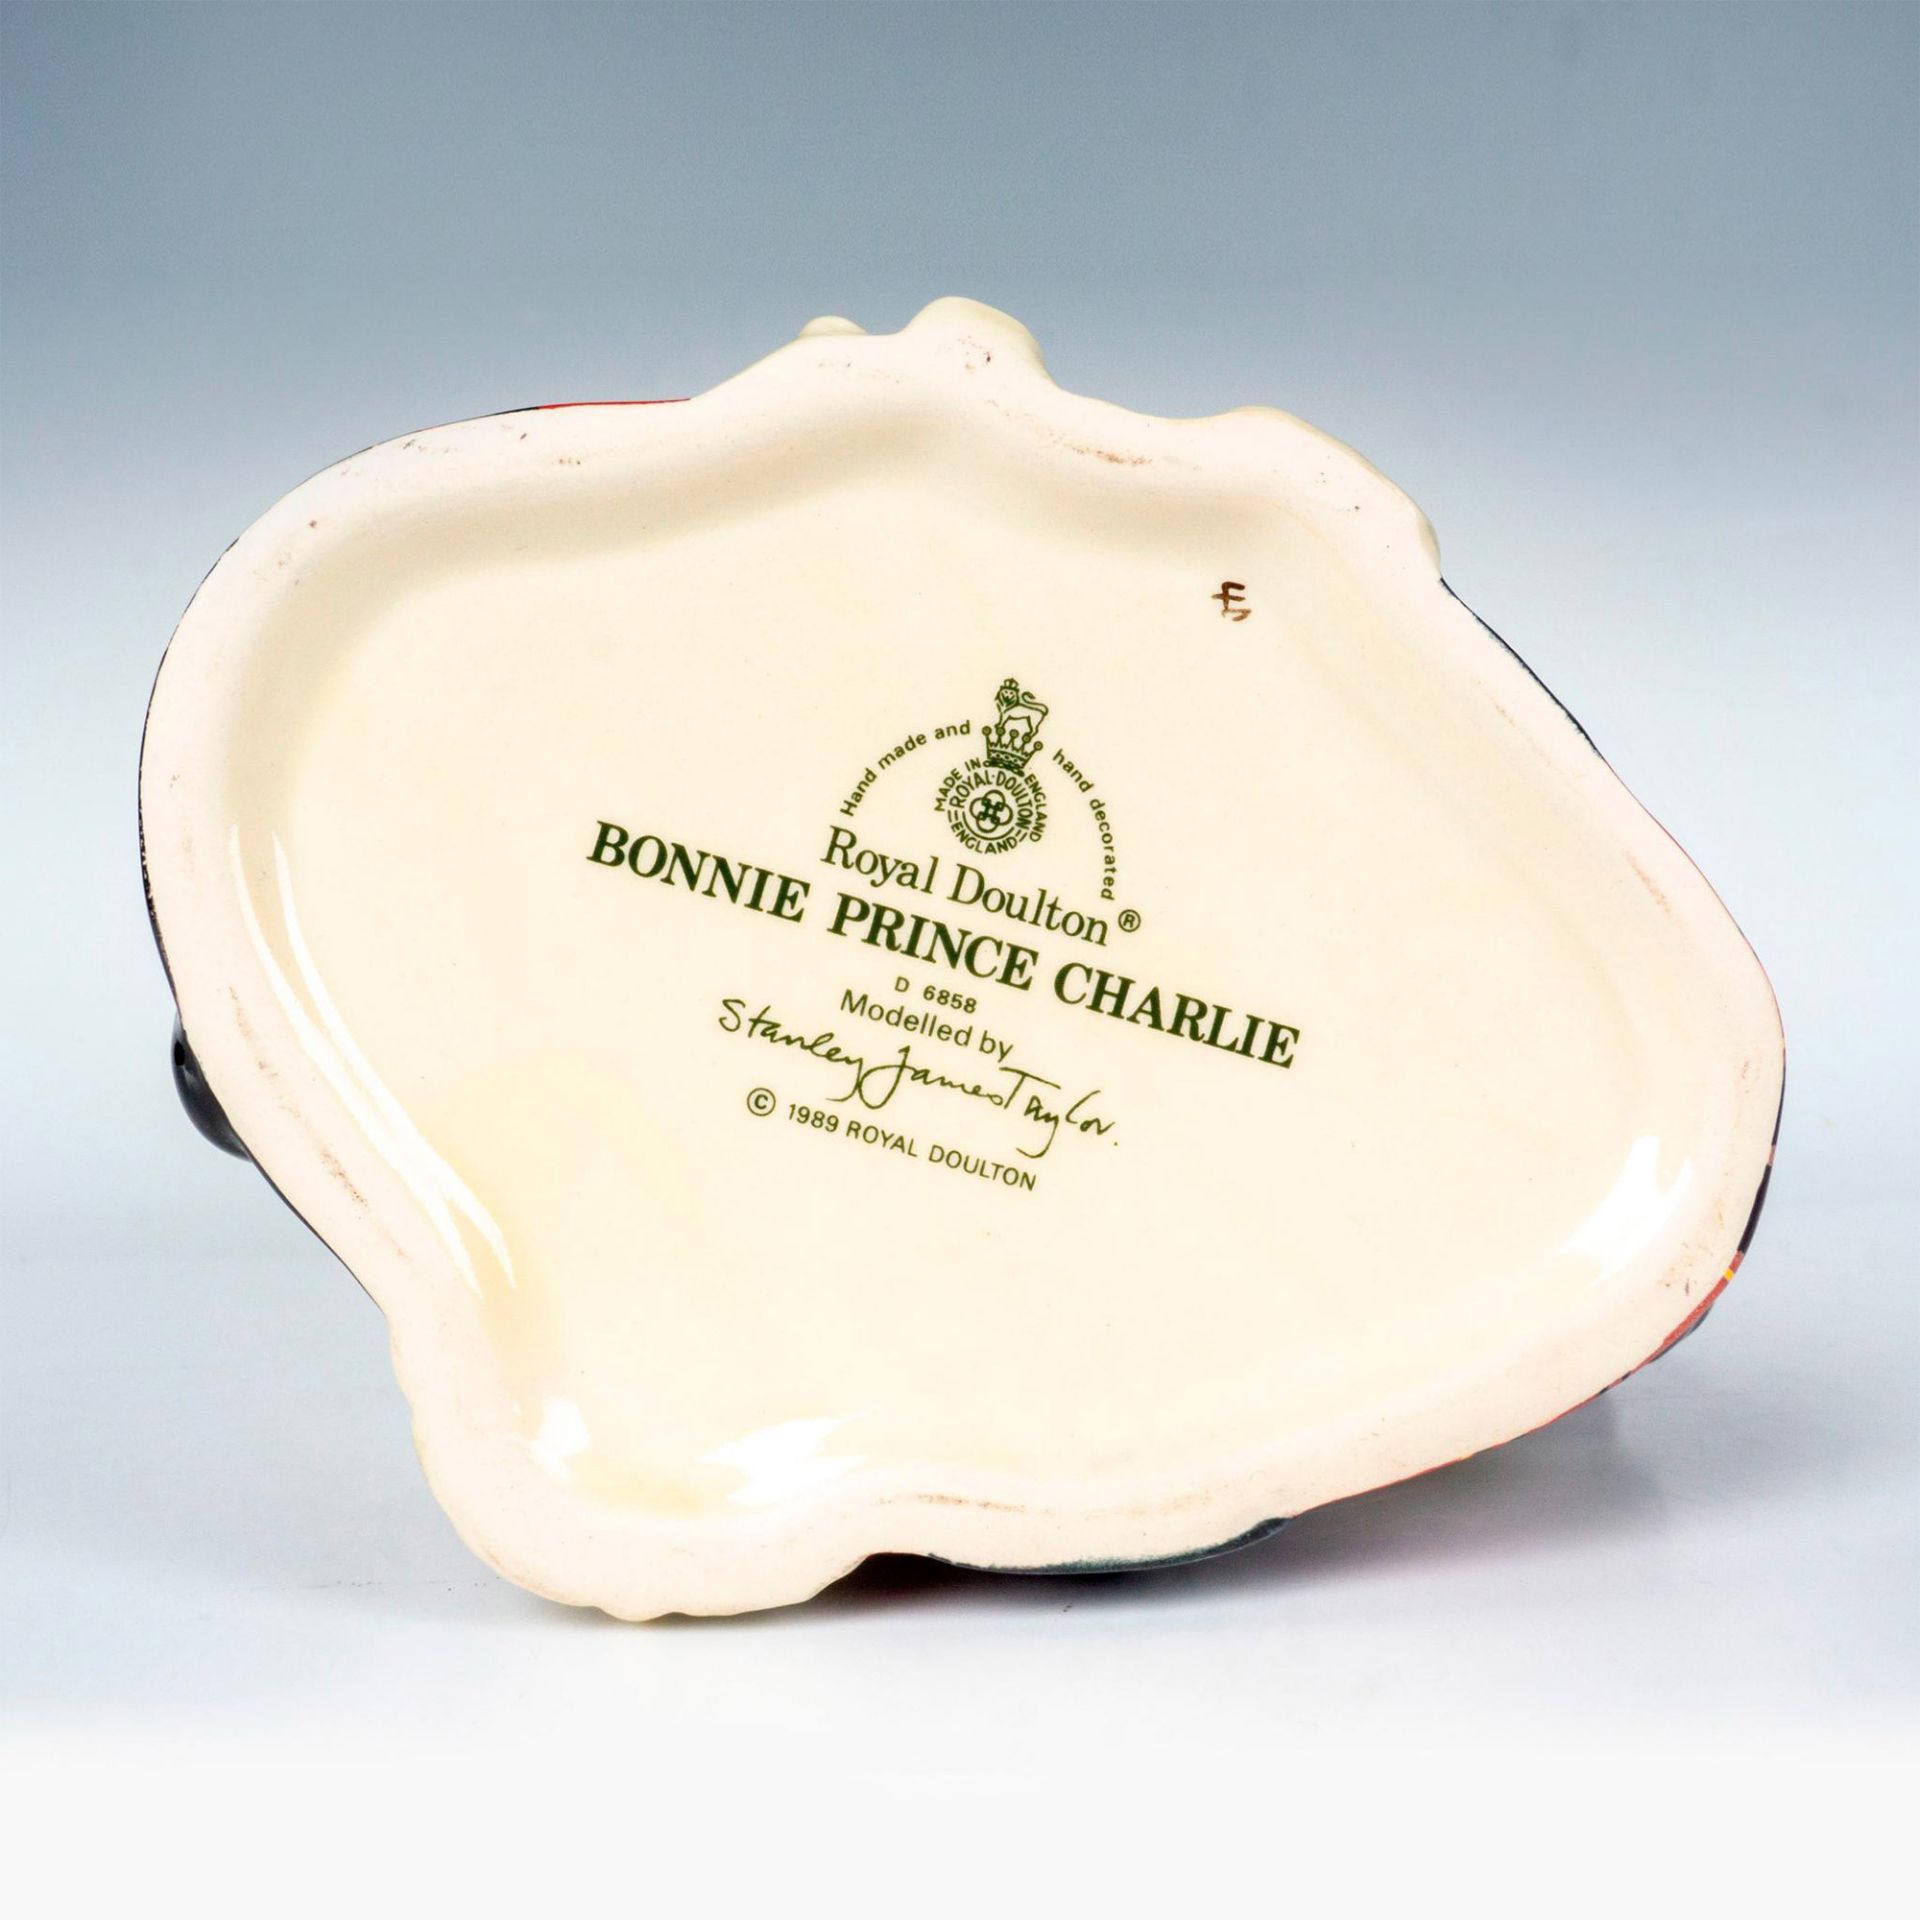 Bonnie Prince Charlie D6858 - Large - Royal Doulton Character Jug - Image 3 of 3